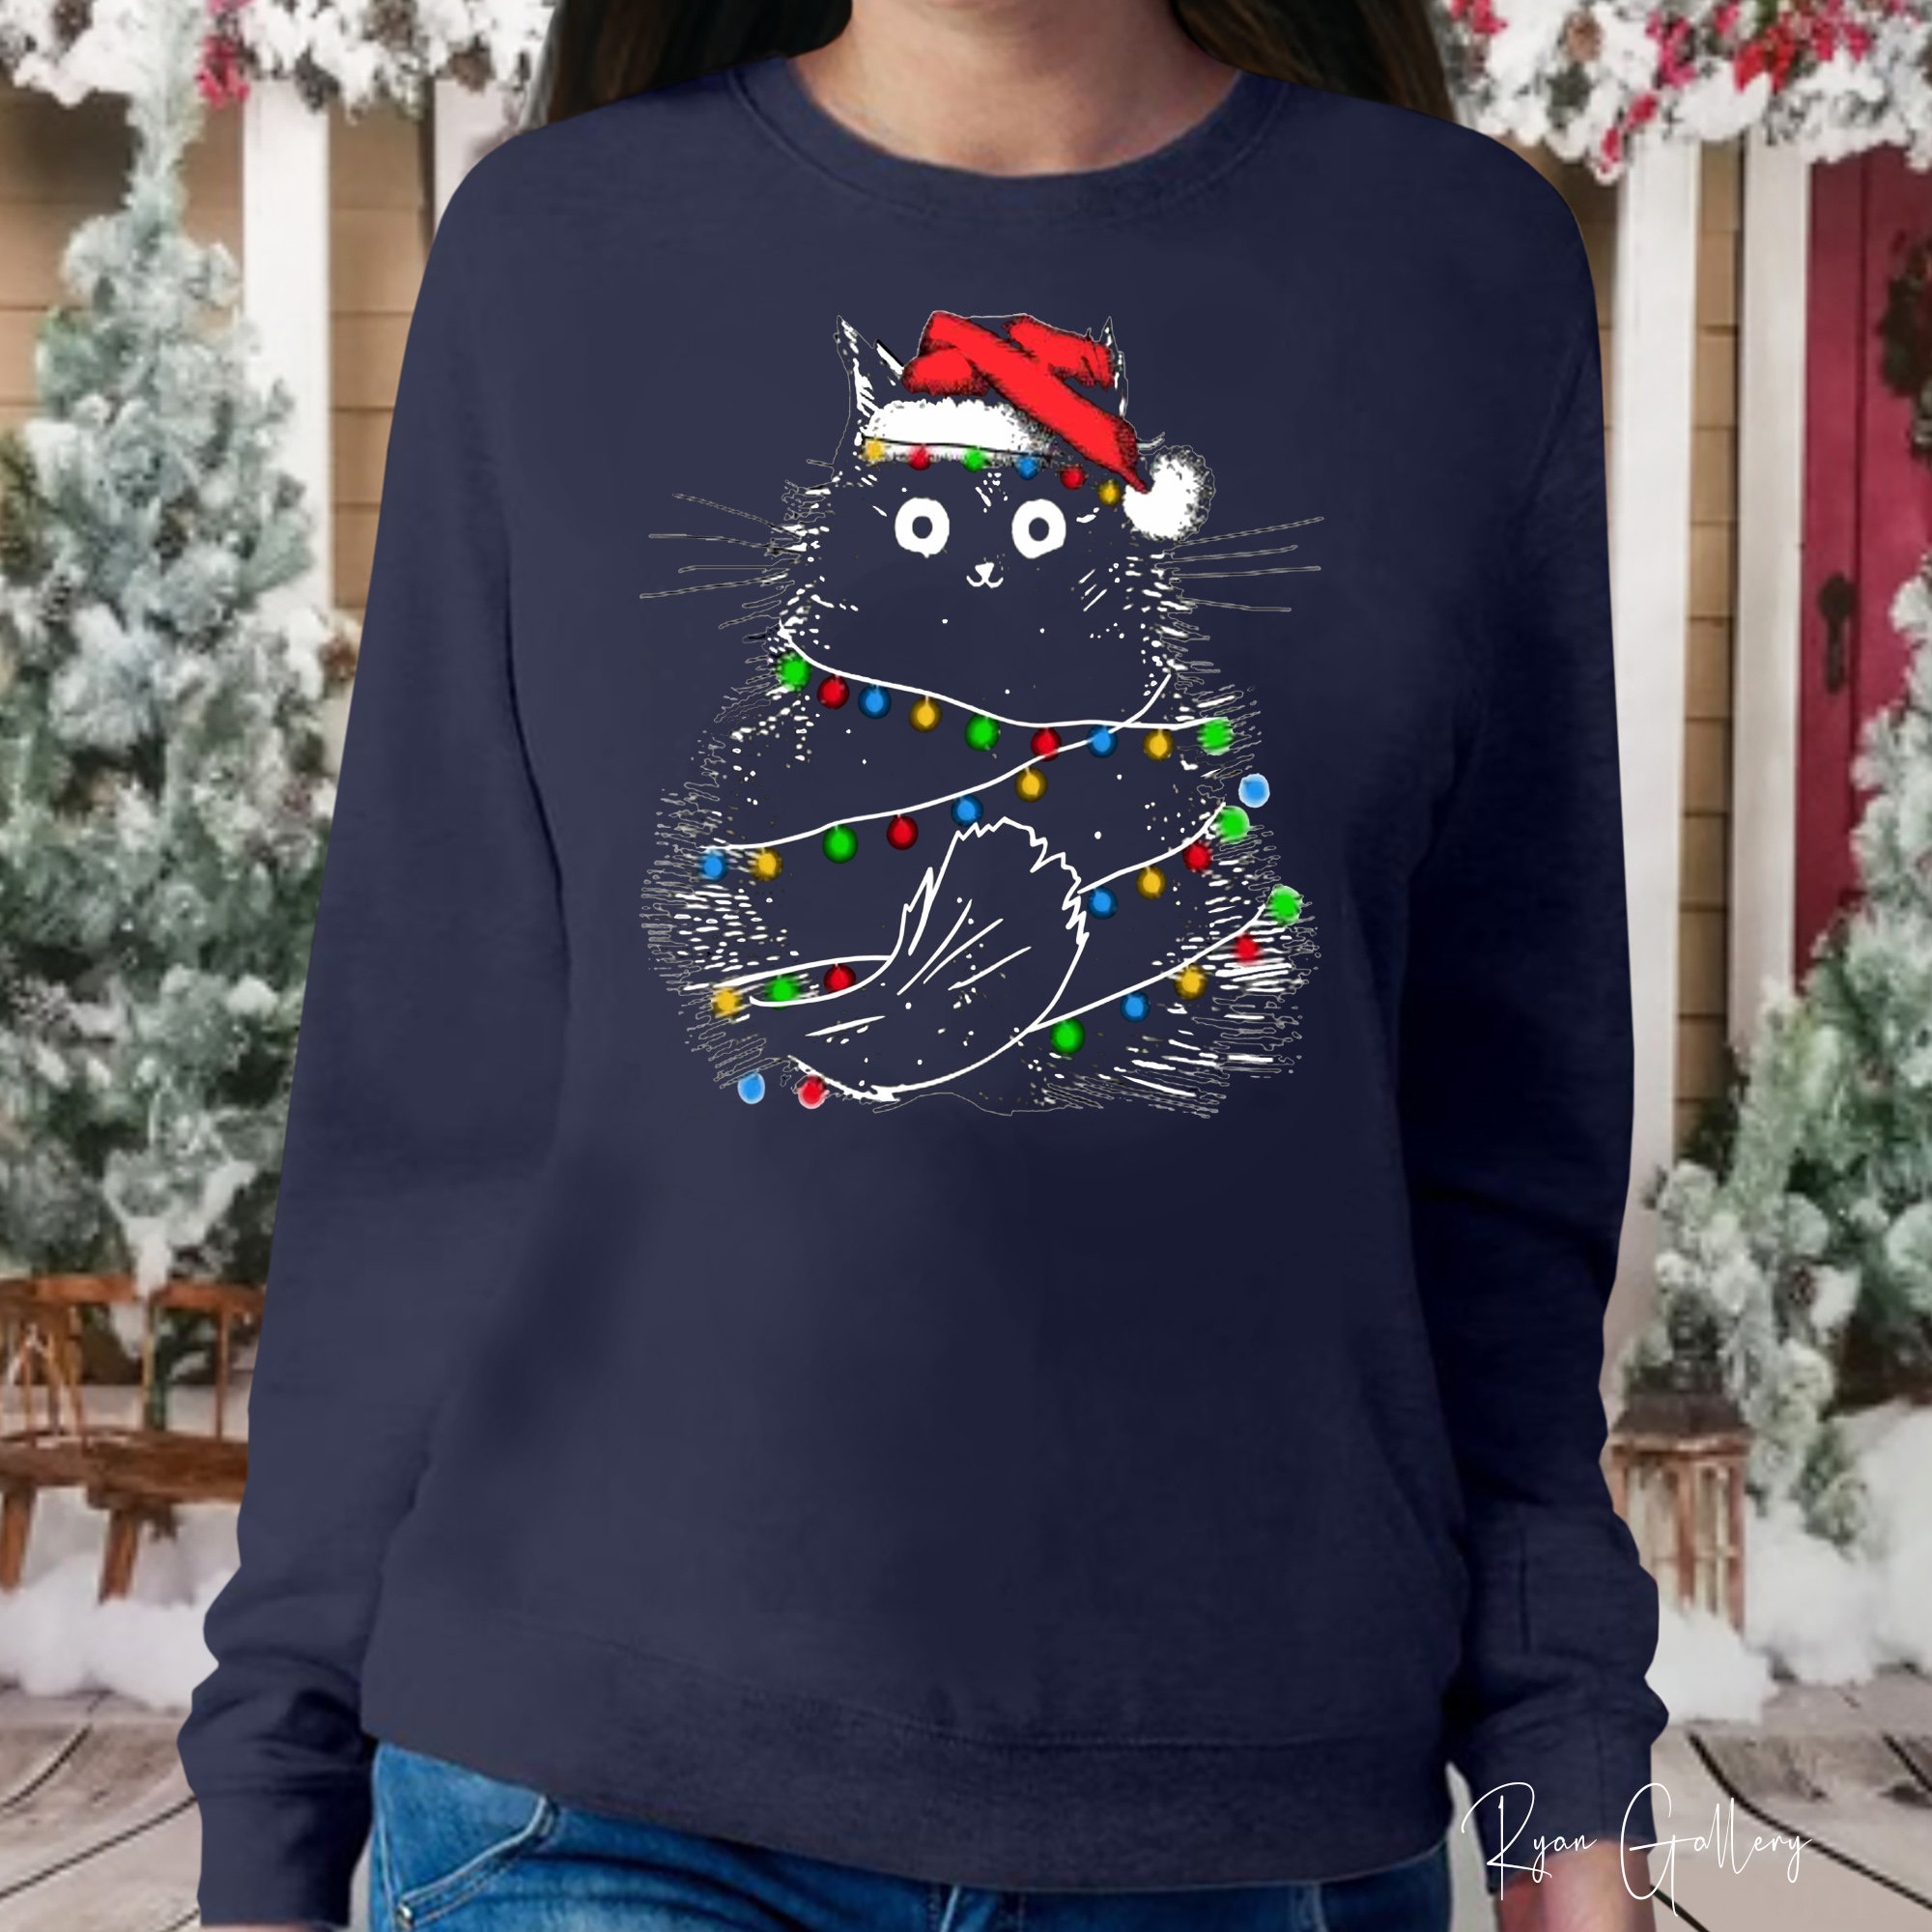 Hat Lights - Xmas Presents Sweatshirt Cats Fluffy With Christmas Jumper, Christmas Santa Christmas Fluffy Cute Gifts Etsy Cats Sweatshirt, Family